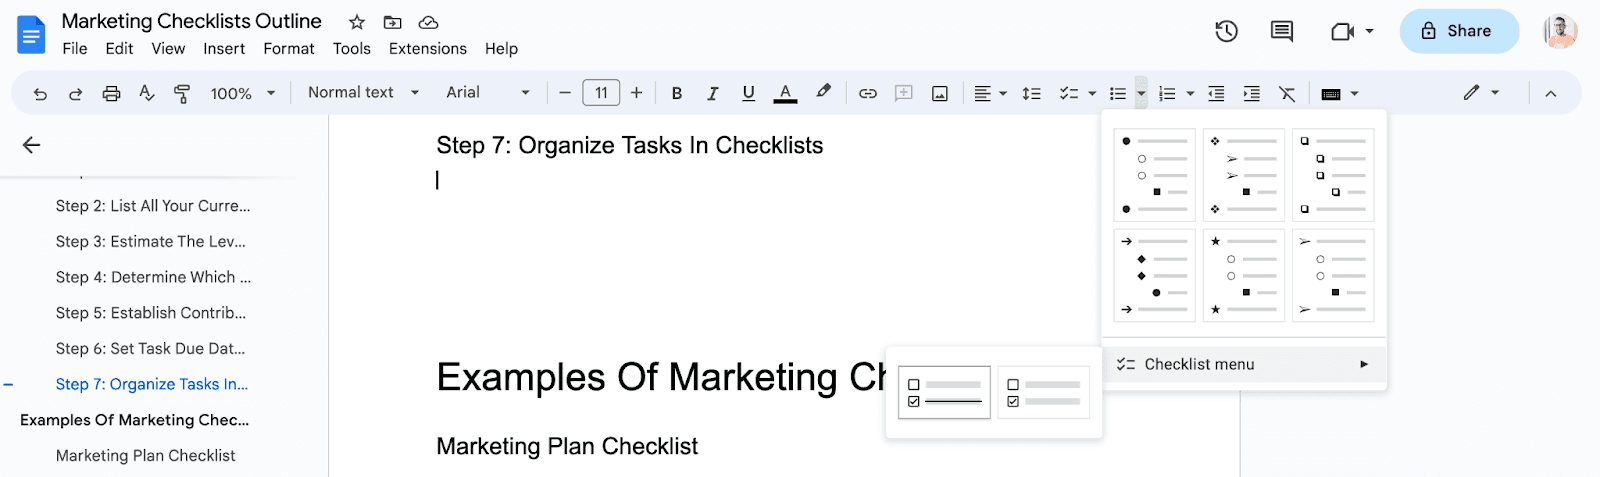 Marketing checklist outline on Google Docs